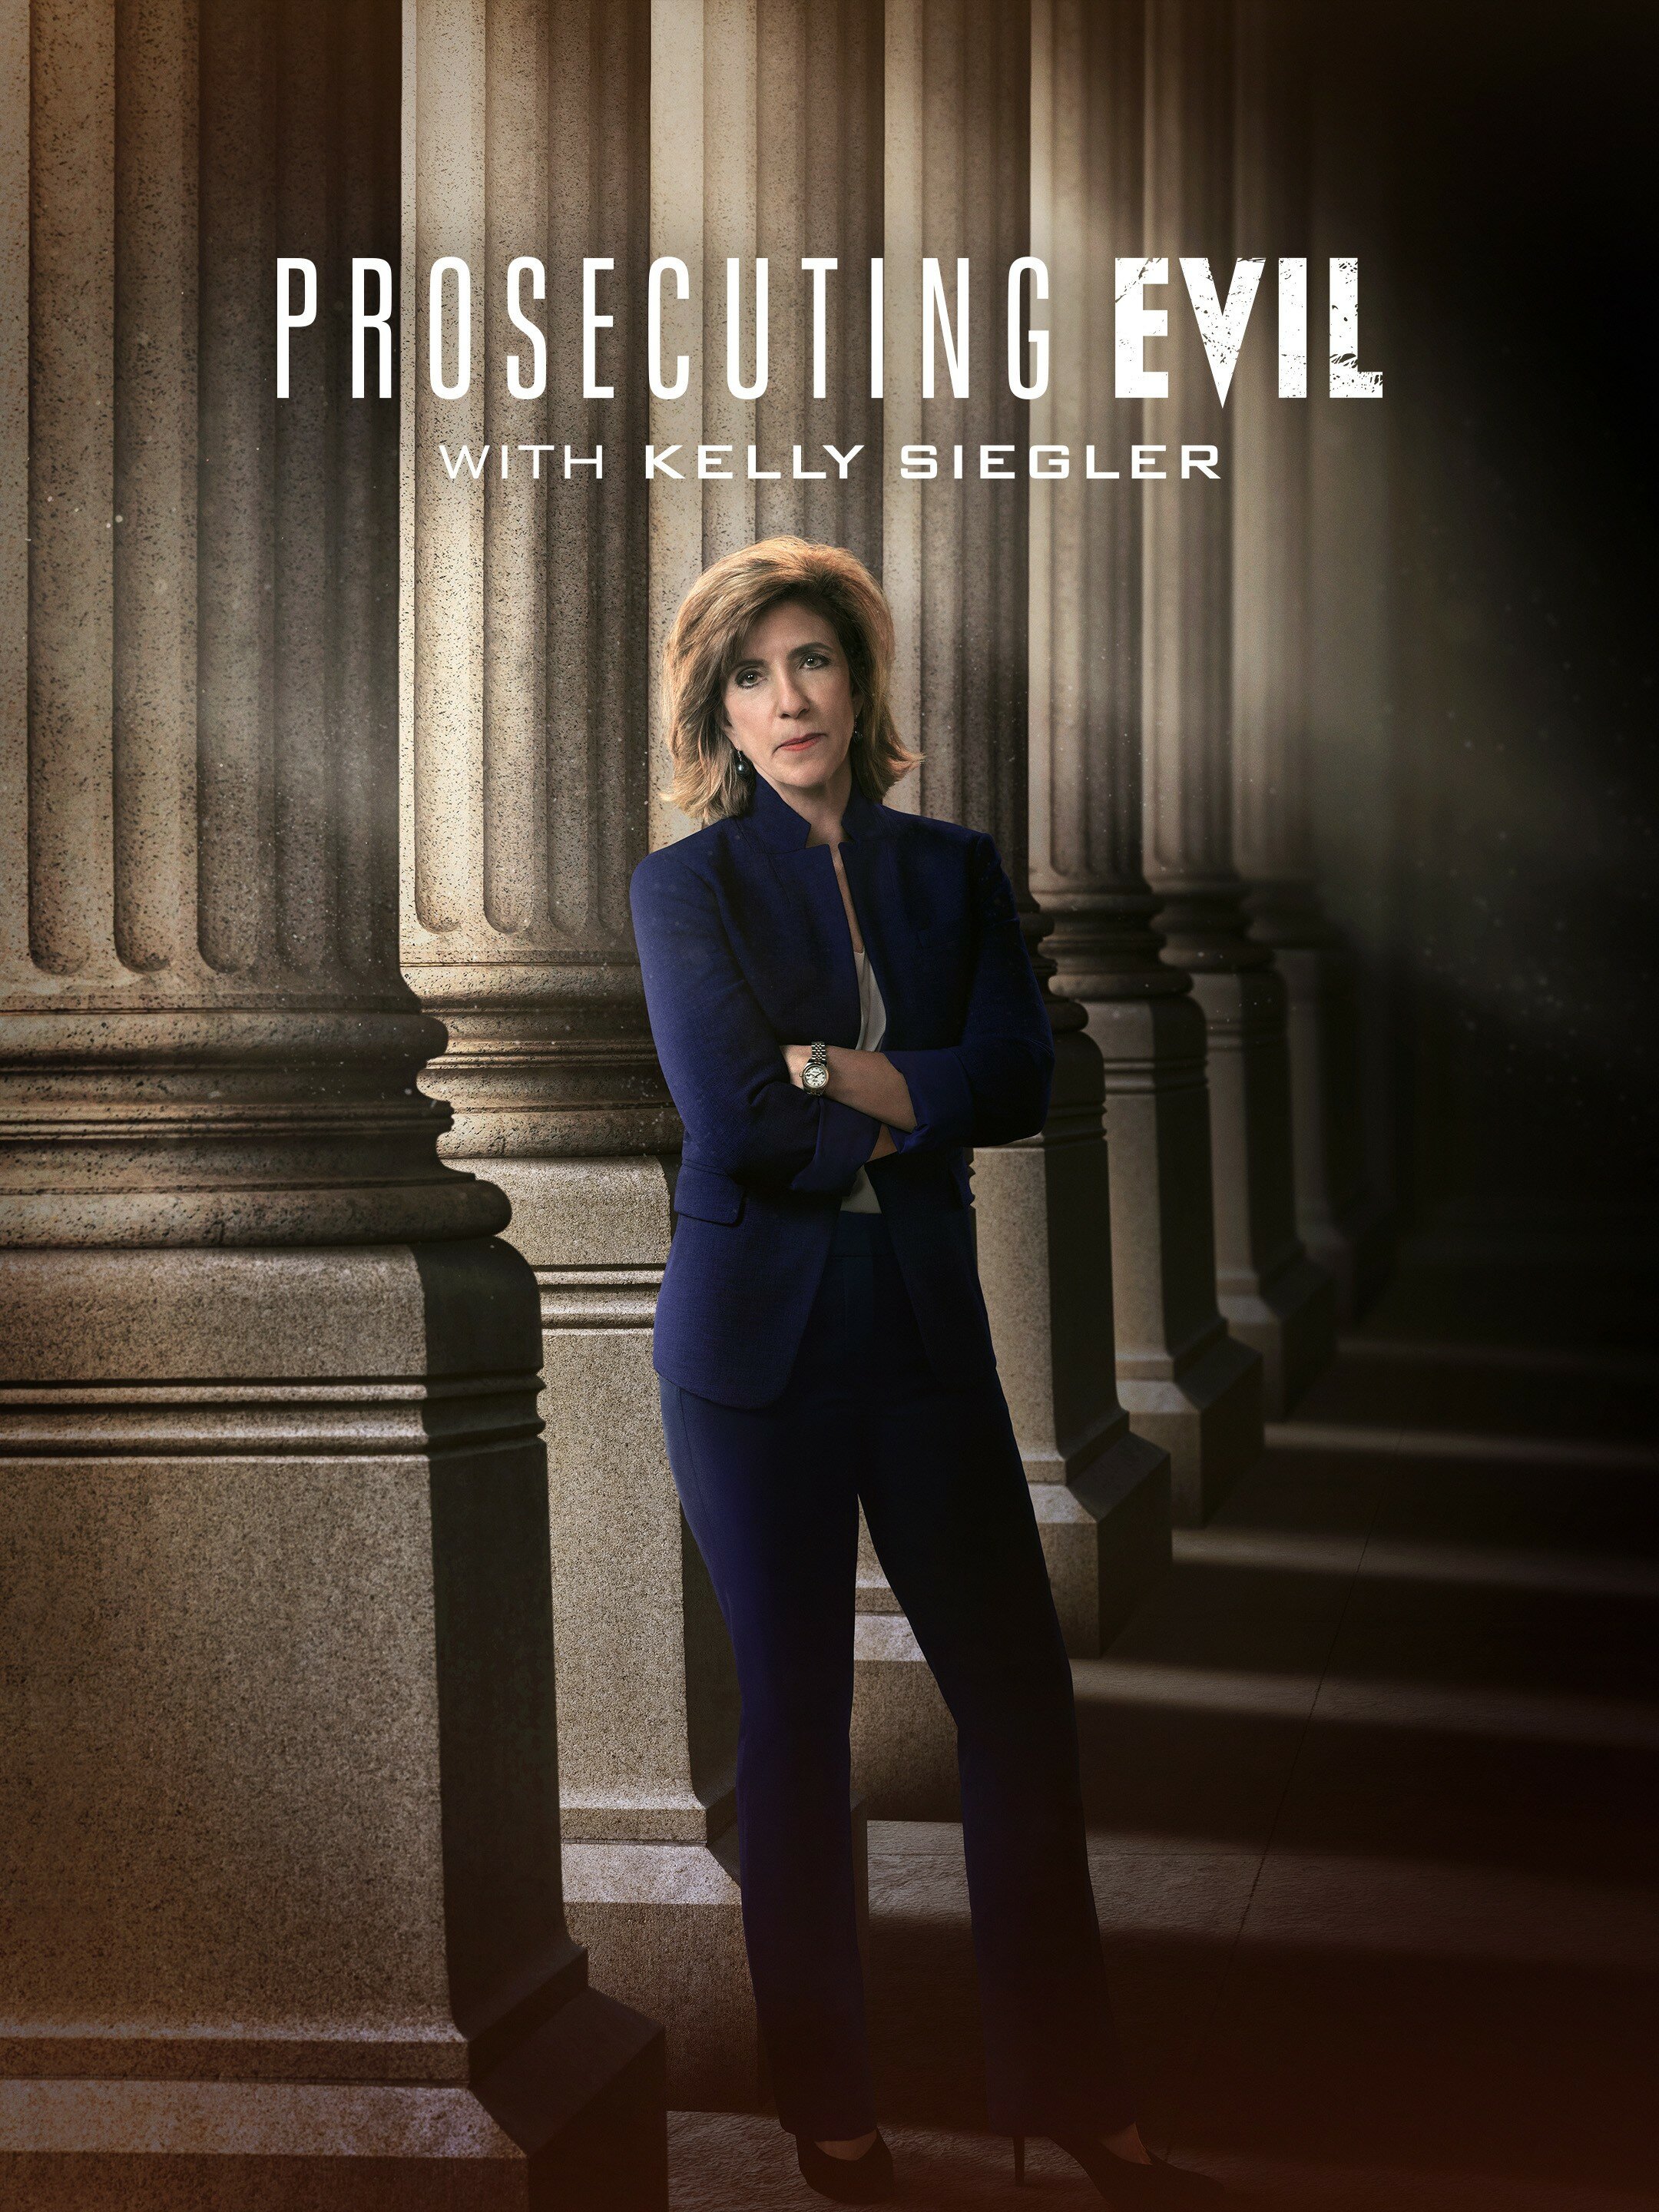 Prosecuting Evil with Kelly Siegler ne zaman